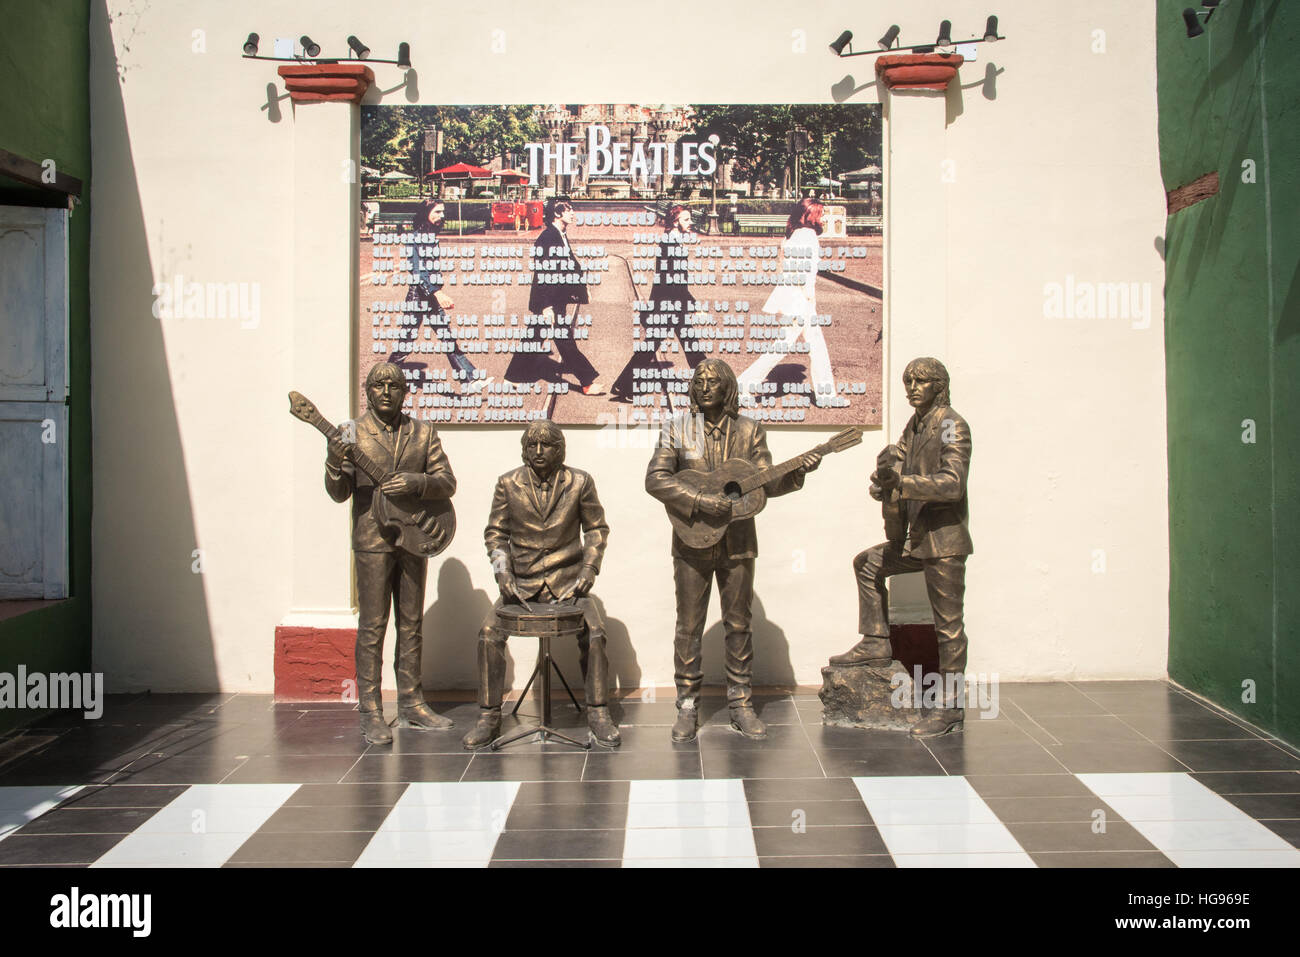 The Beatles Statues, Trinidad, Cuba Stock Photo